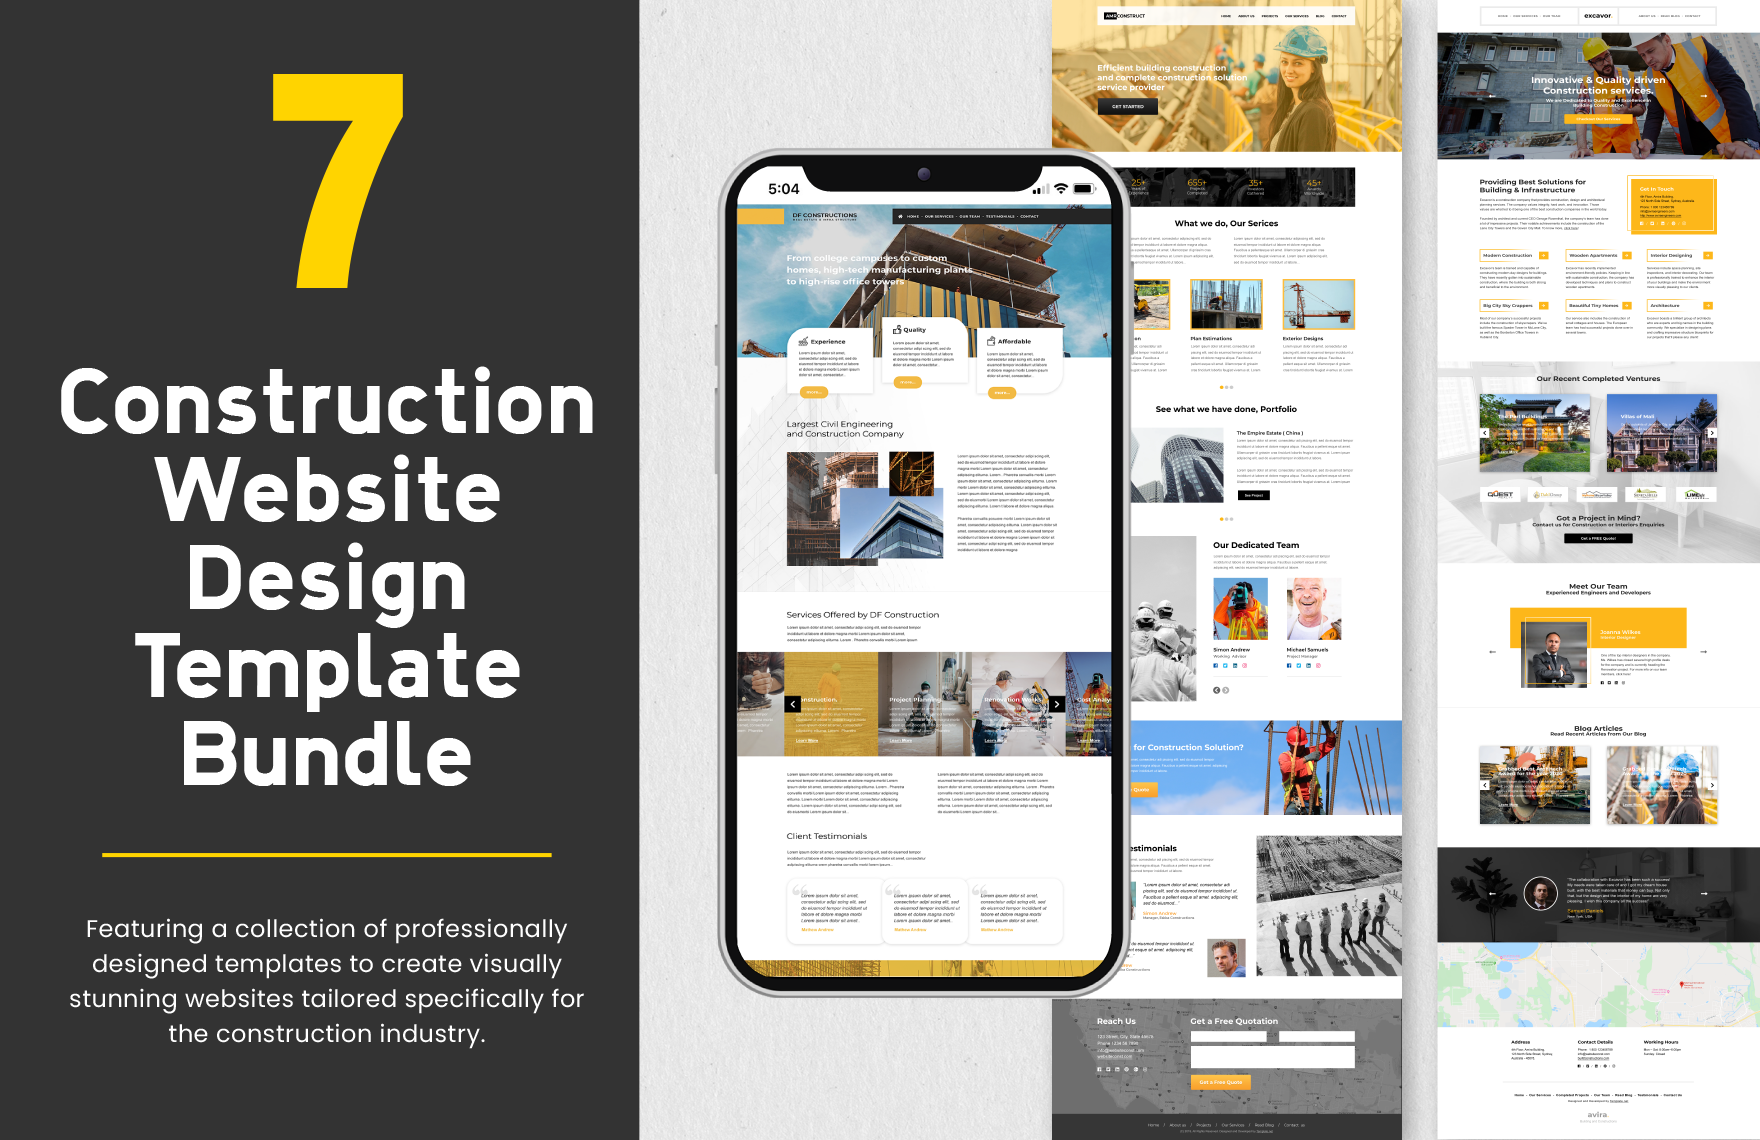 7 Construction Website Design Template Bundle